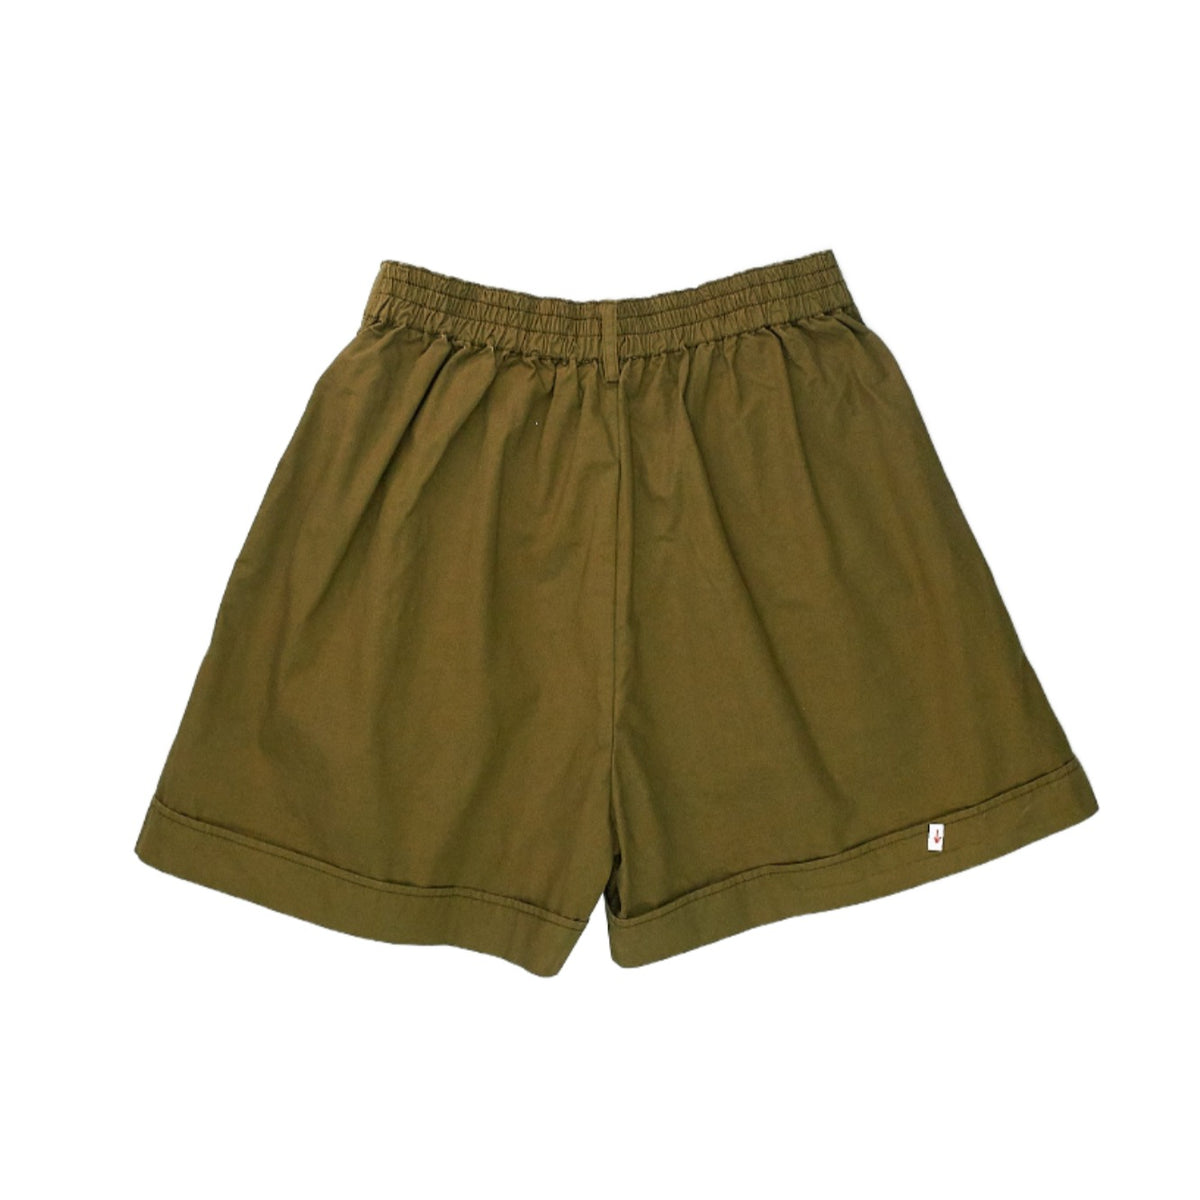 YMC Dark Olive Pleated Shorts